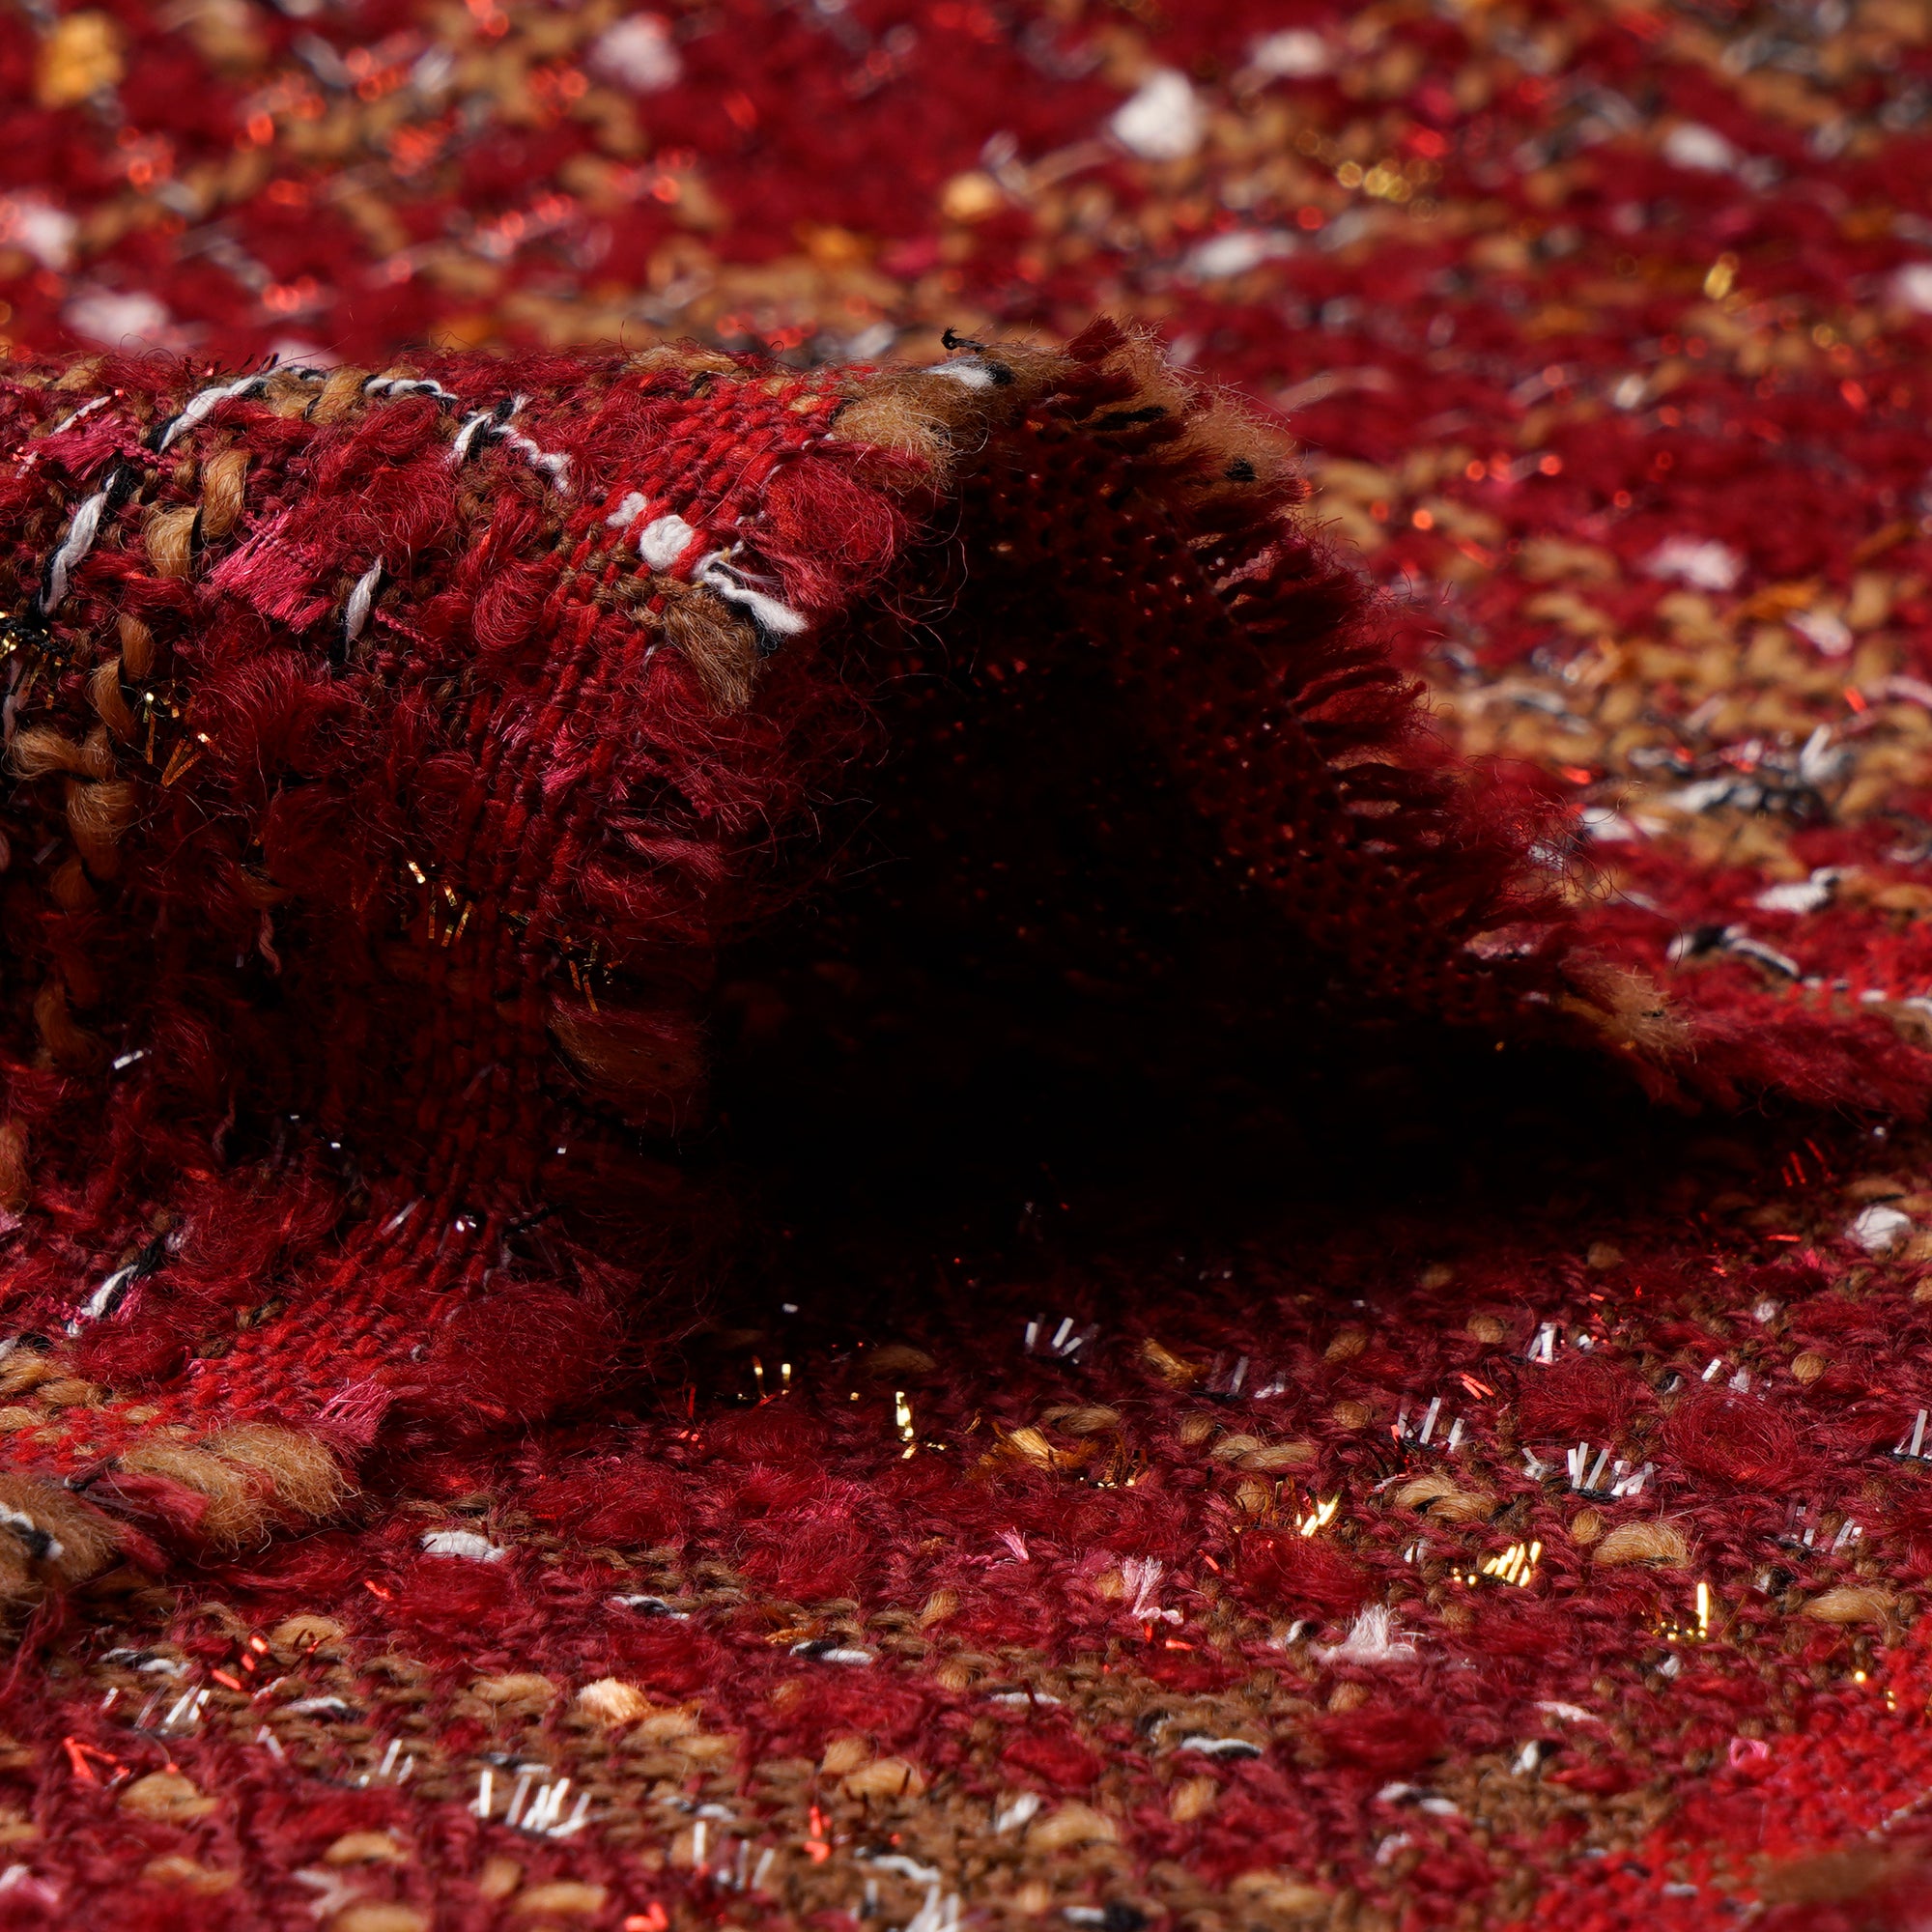 Red Premium Metallic Tweed Fabric (60" Width)